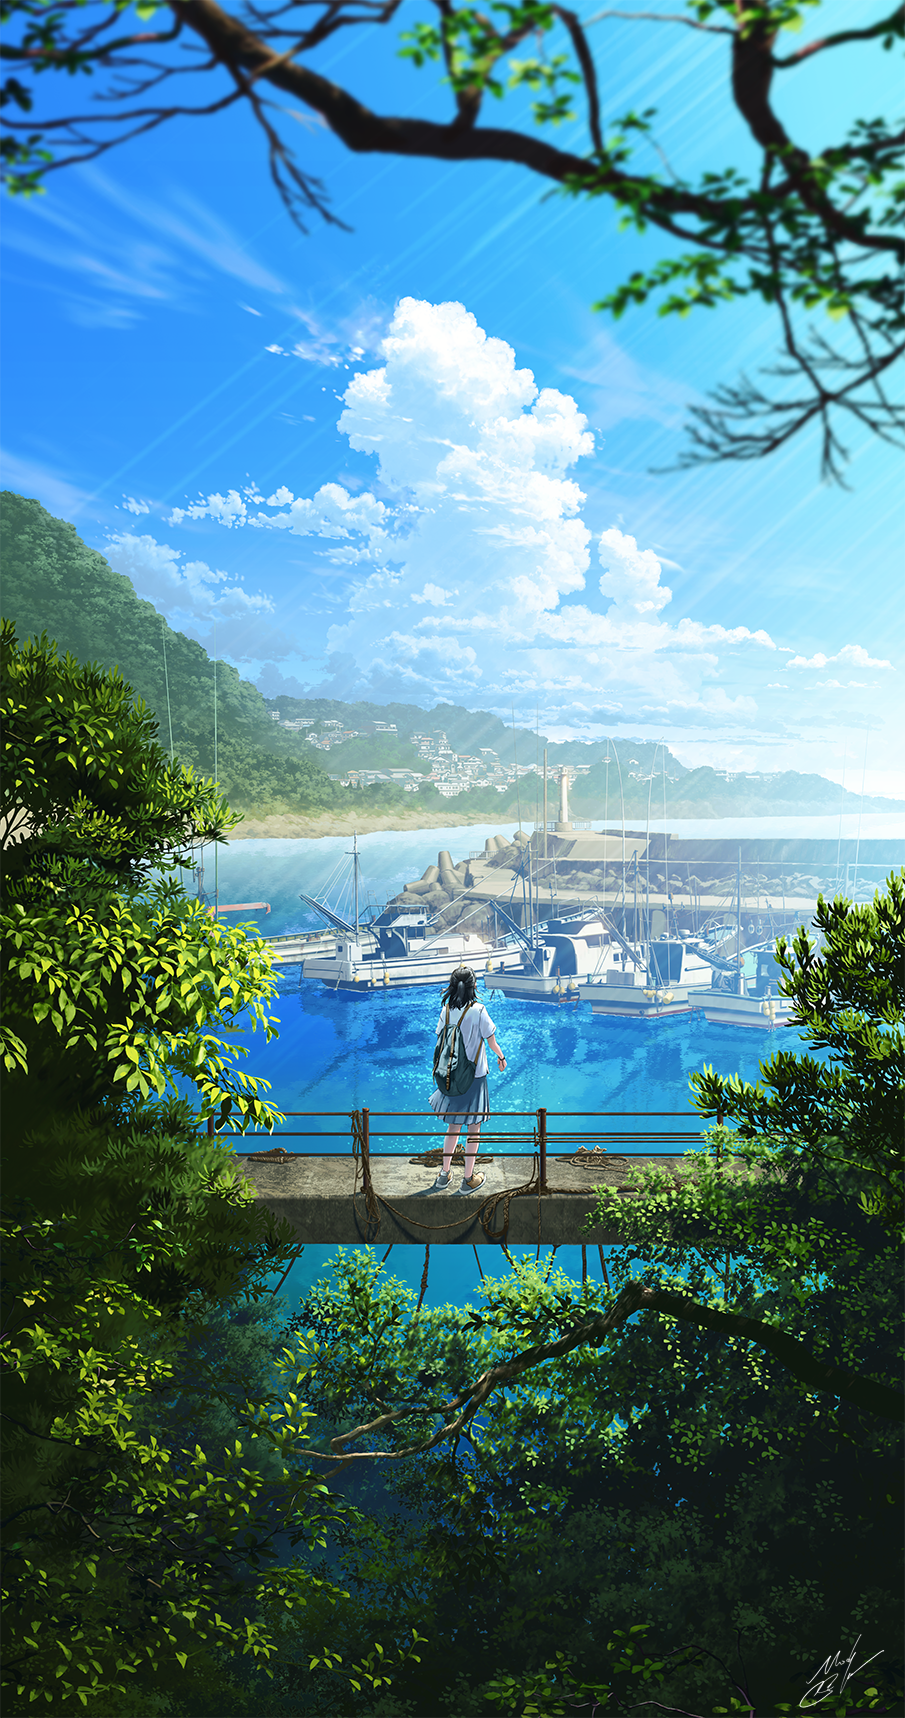 Anime Girls Portrait Display Signature School Uniform Schoolgirl Rear View Sunlight Boat Trees Sky C 905x1718